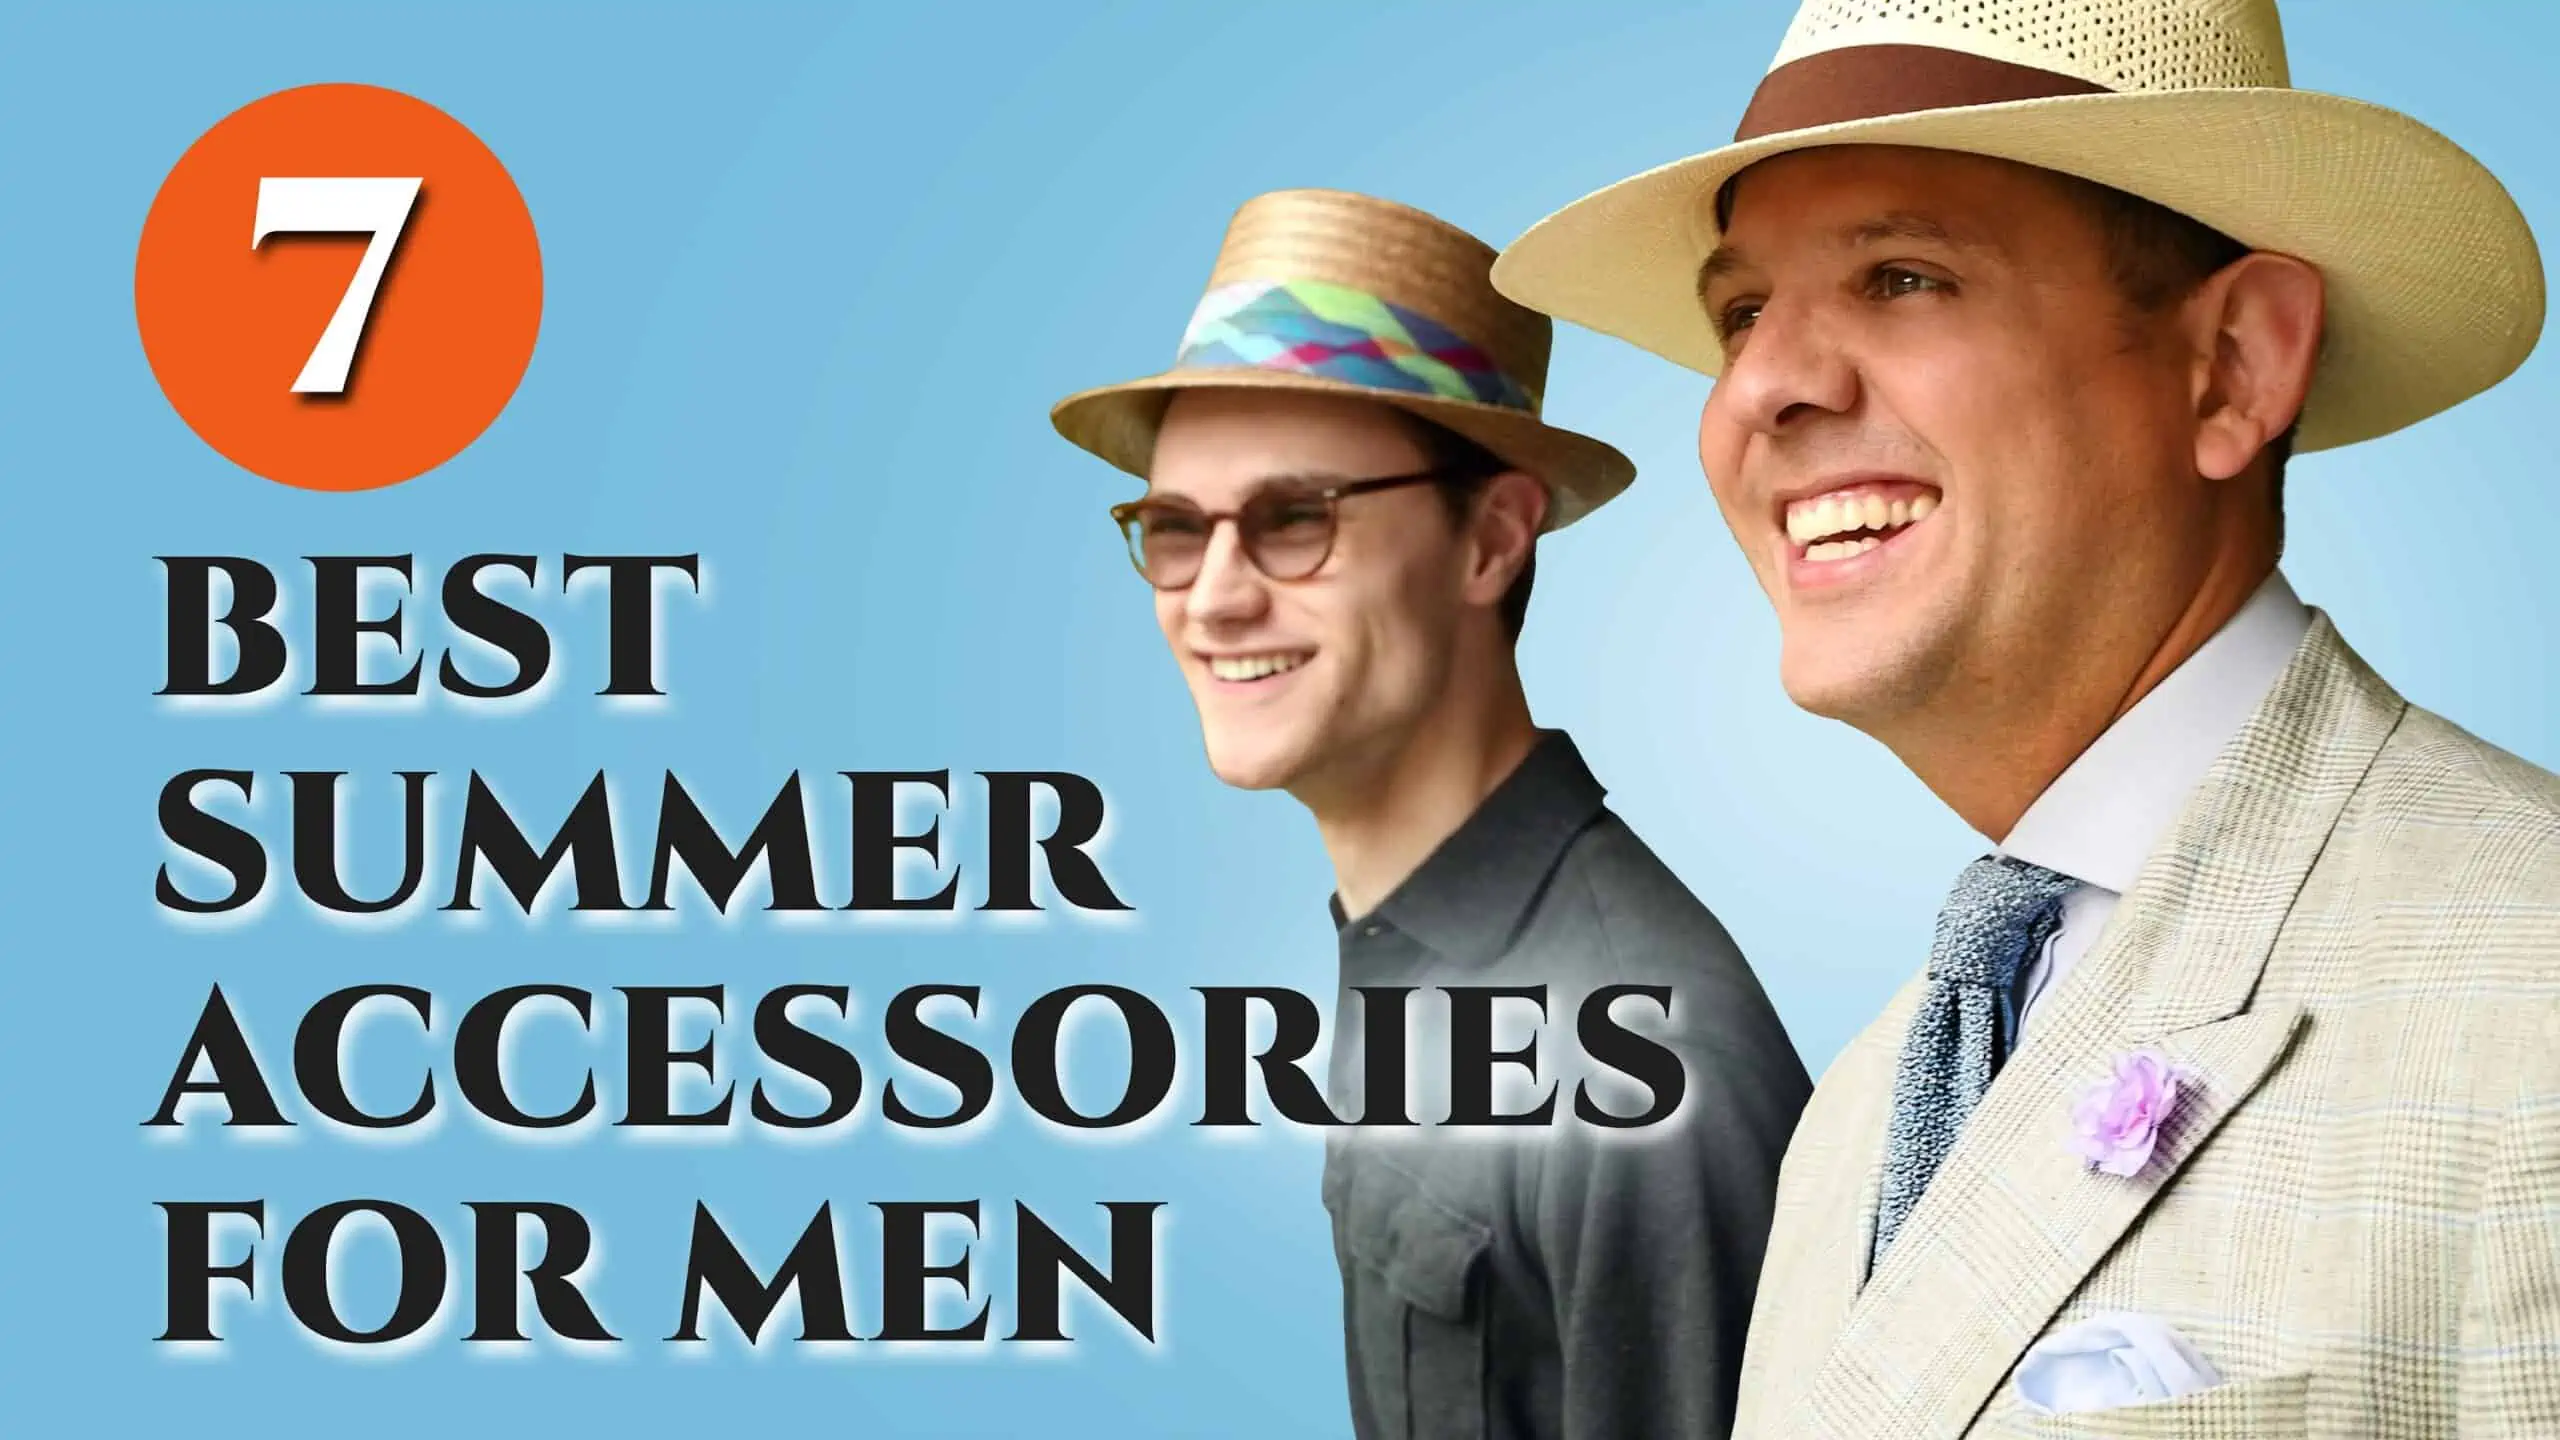 7 Best Summer Accessories For Men - Warm Weather Style